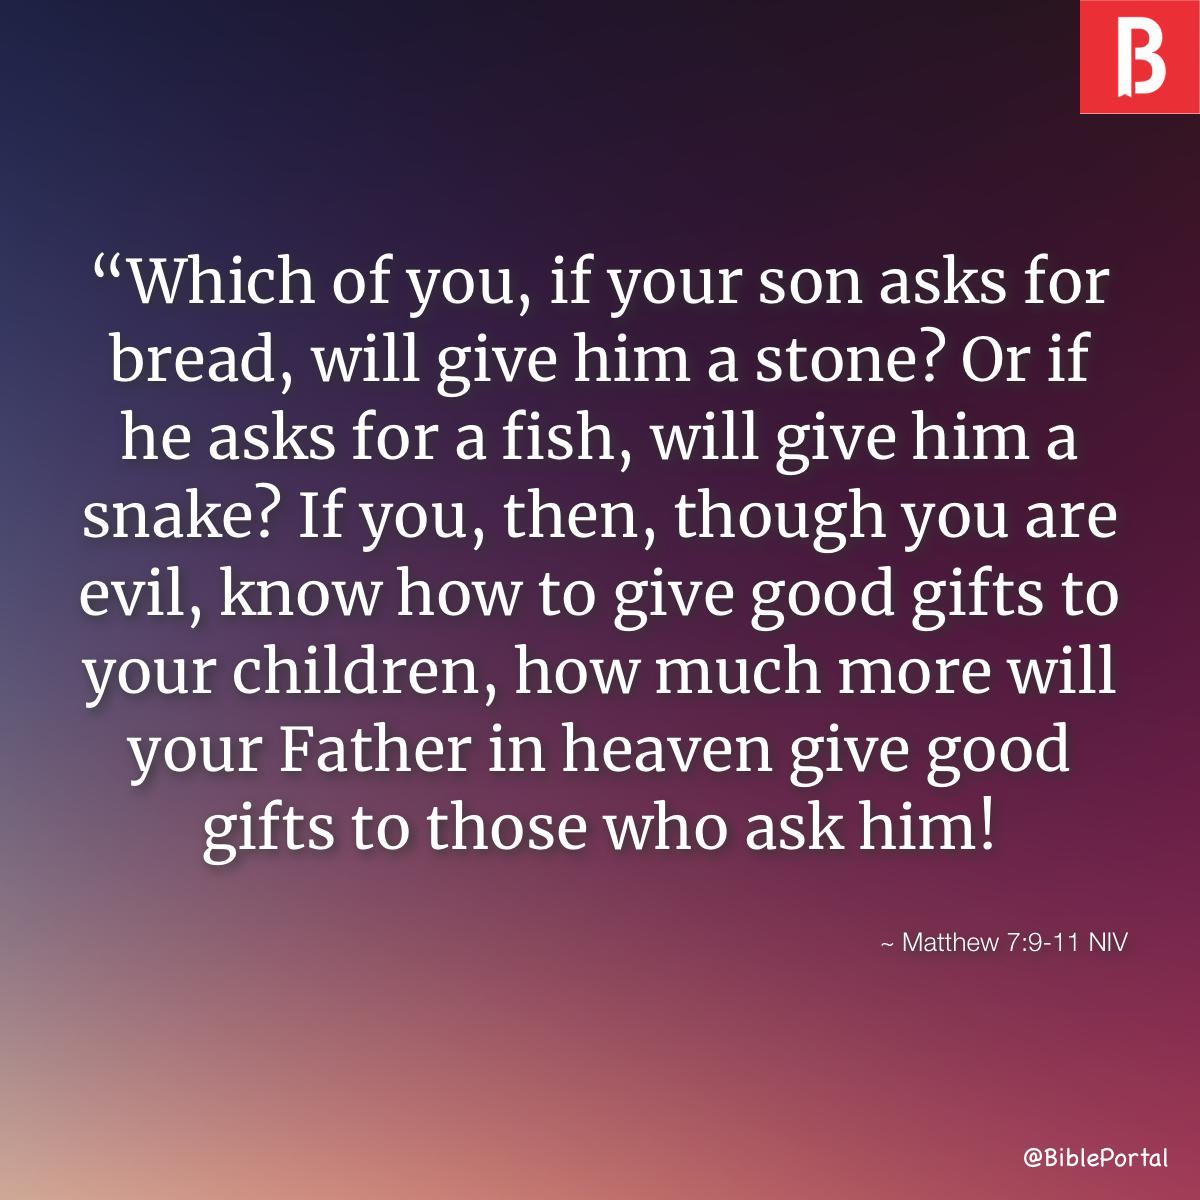 Matthew 7:9-11 NIV